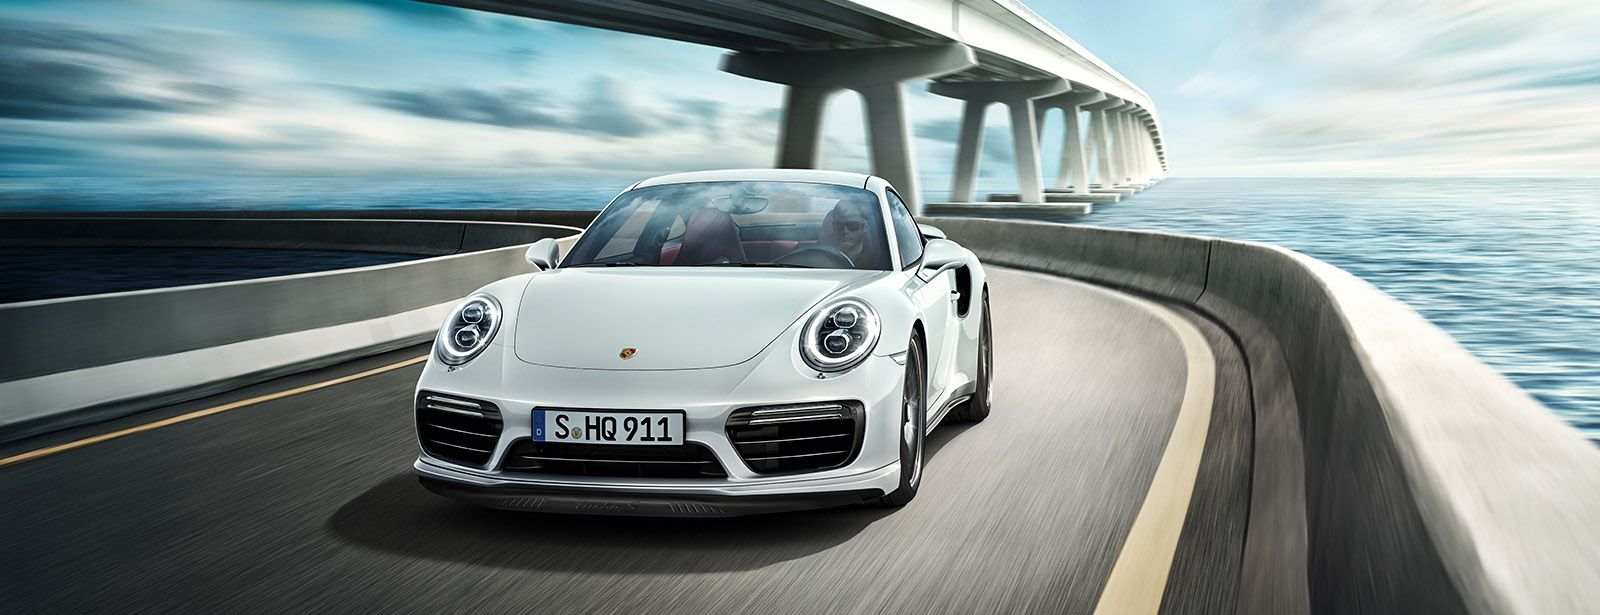 Porsche Stability Management (PSM)